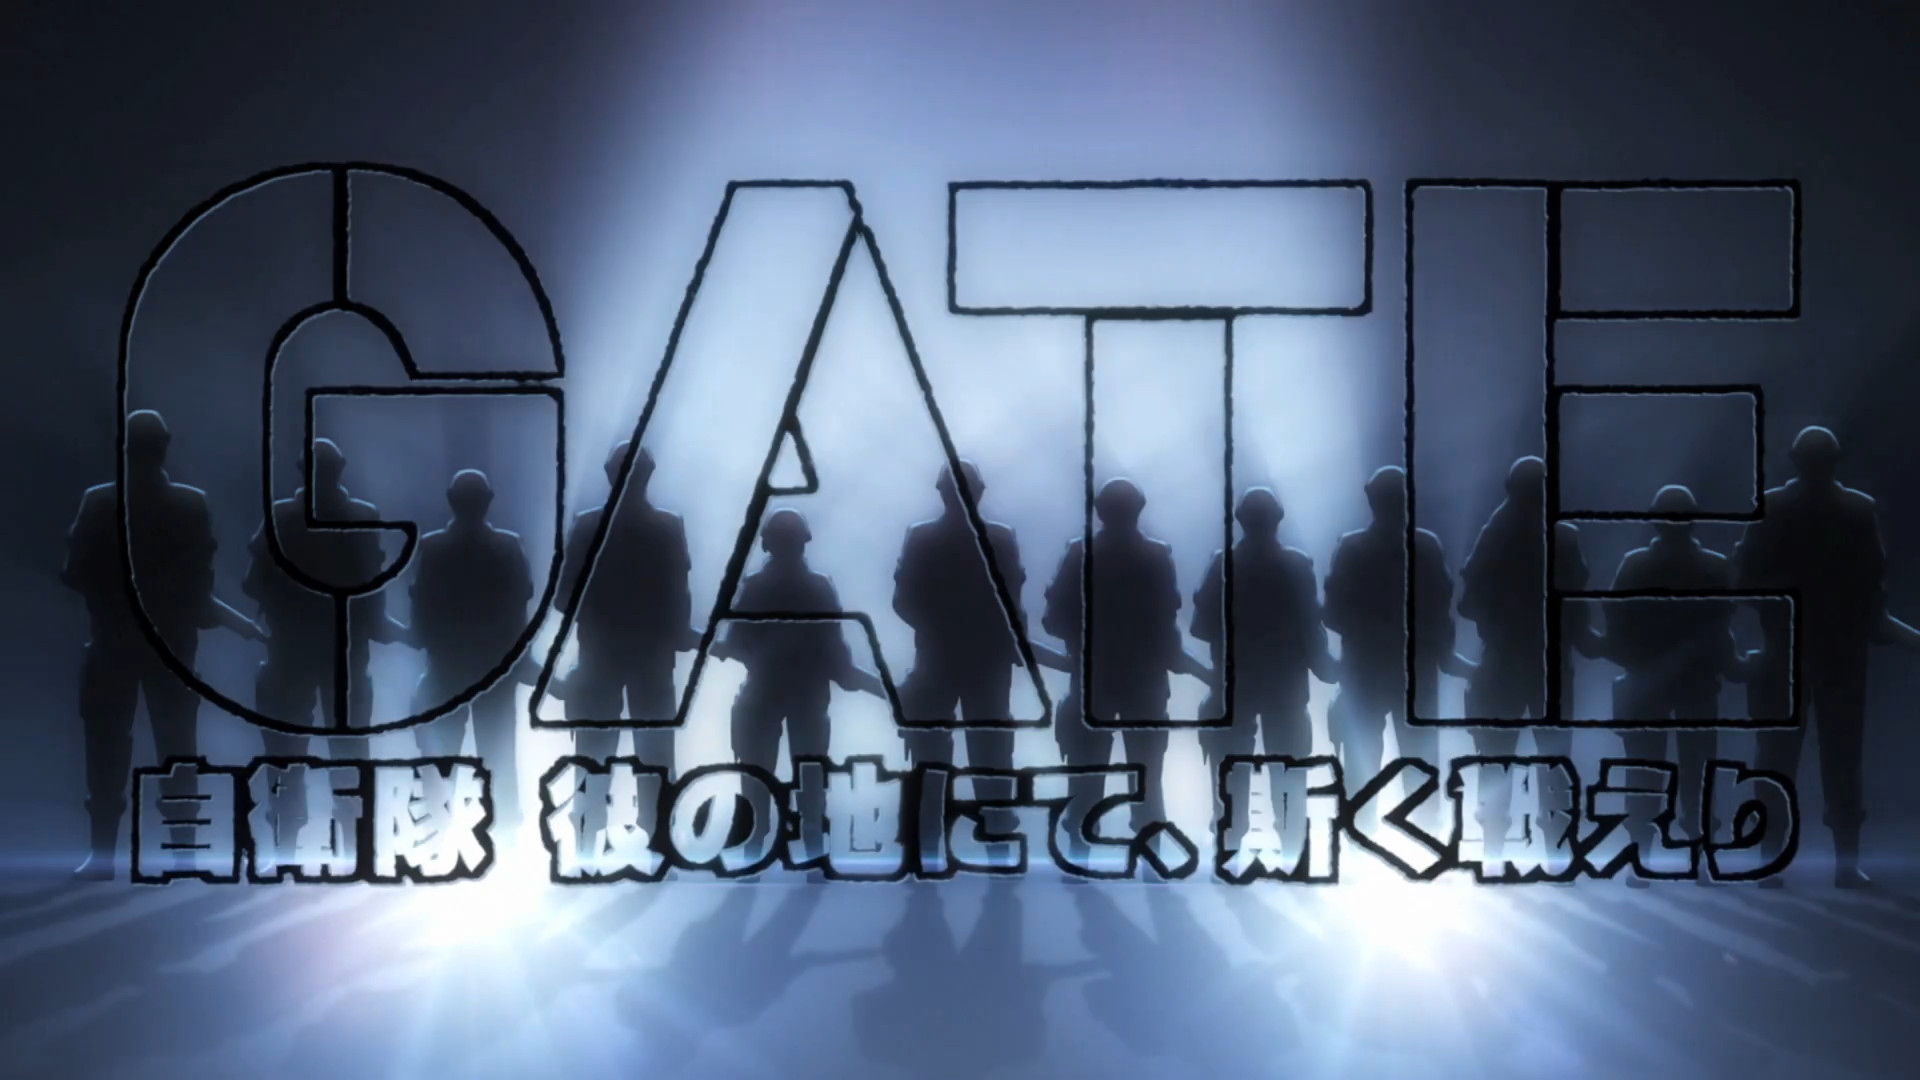 Sentai Filmworks Licenses "GATE"